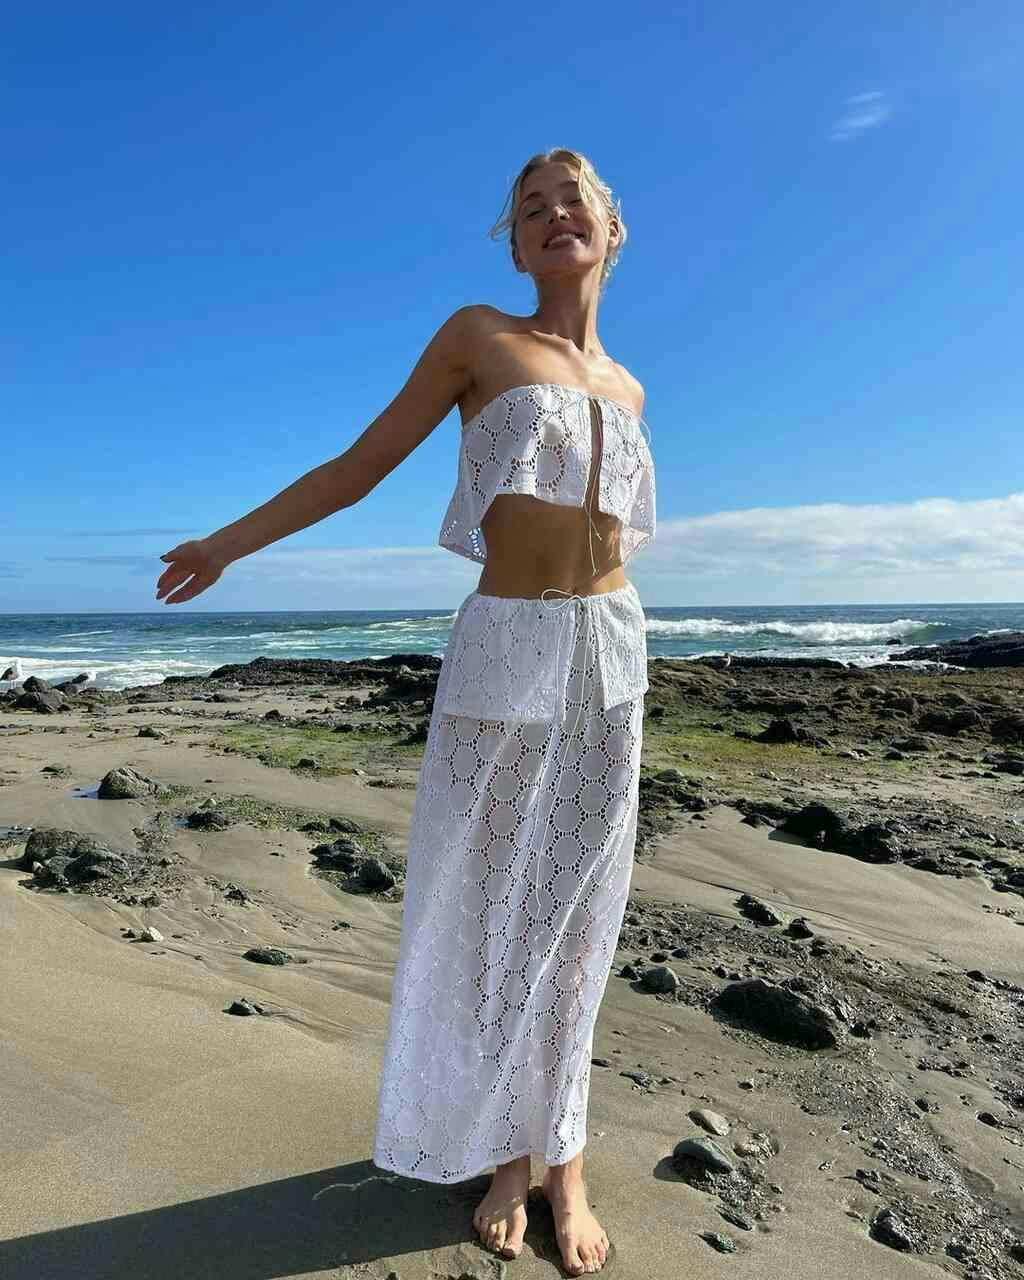 beachwear clothing adult female person woman